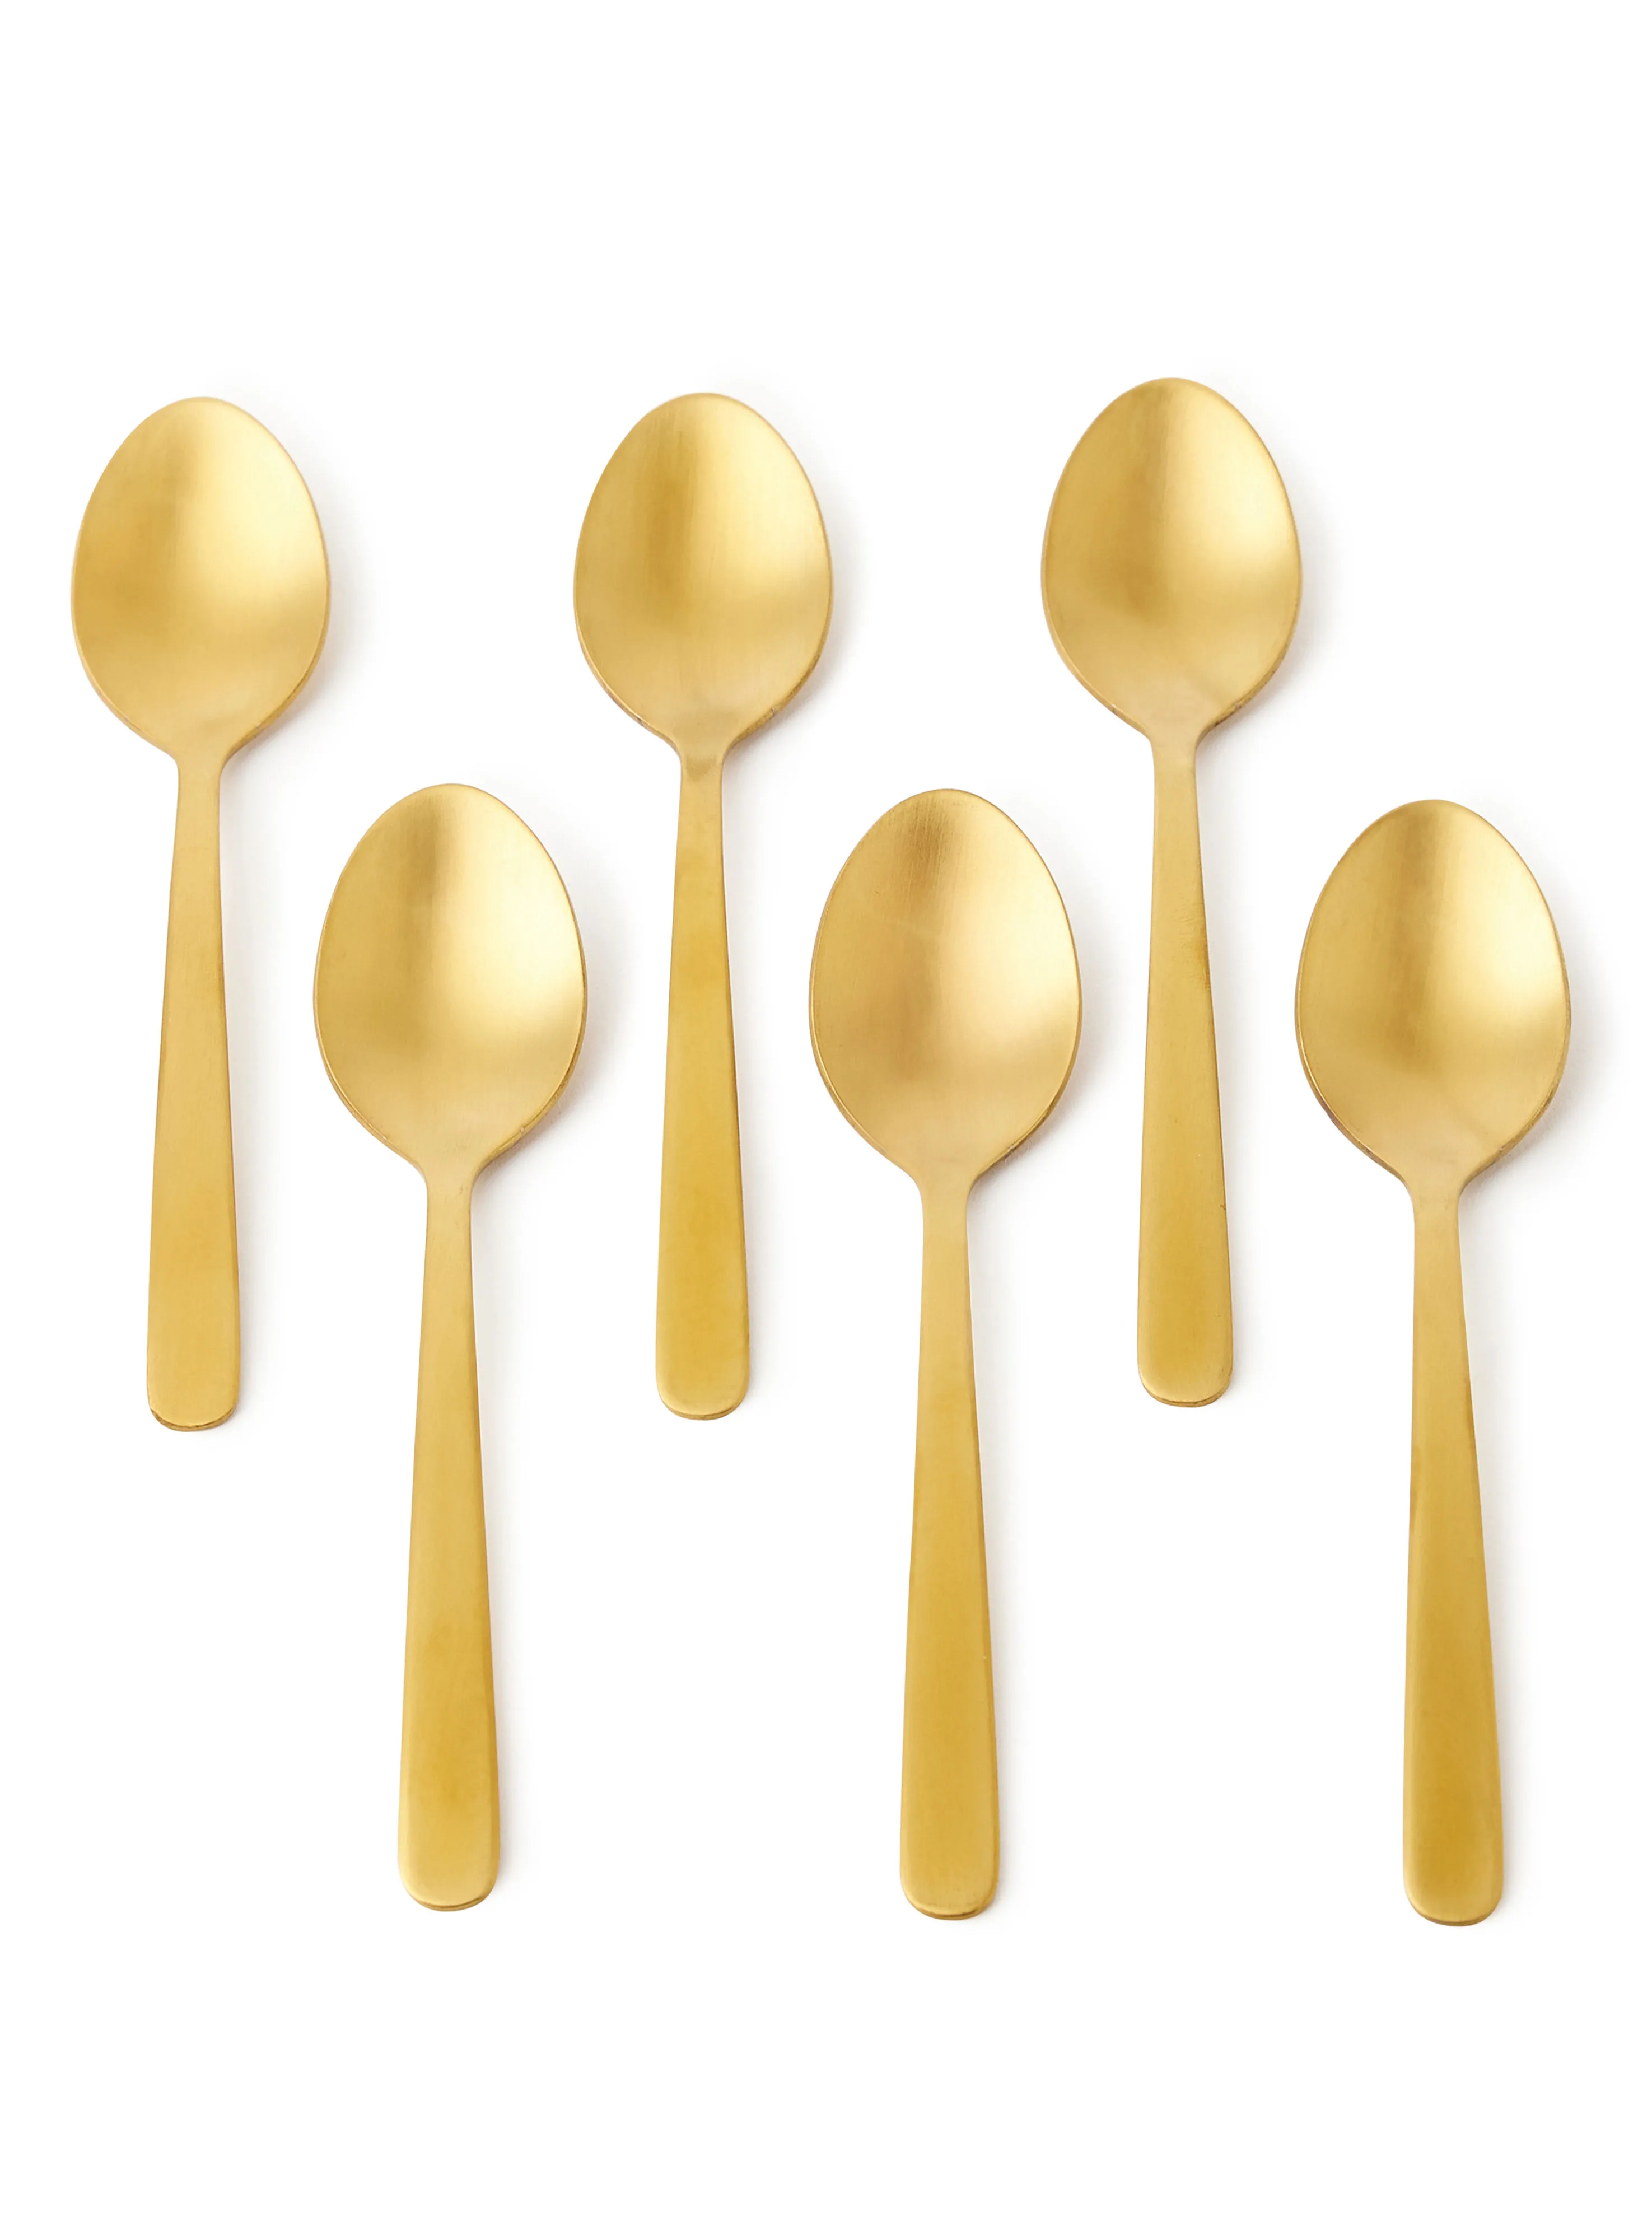 noon east 6 Piece Teaspoons Set - Made Of Stainless Steel - Silverware Flatware - Spoons - Spoon Set - Tea Spoons - Serves 6 - Design Gold Sail